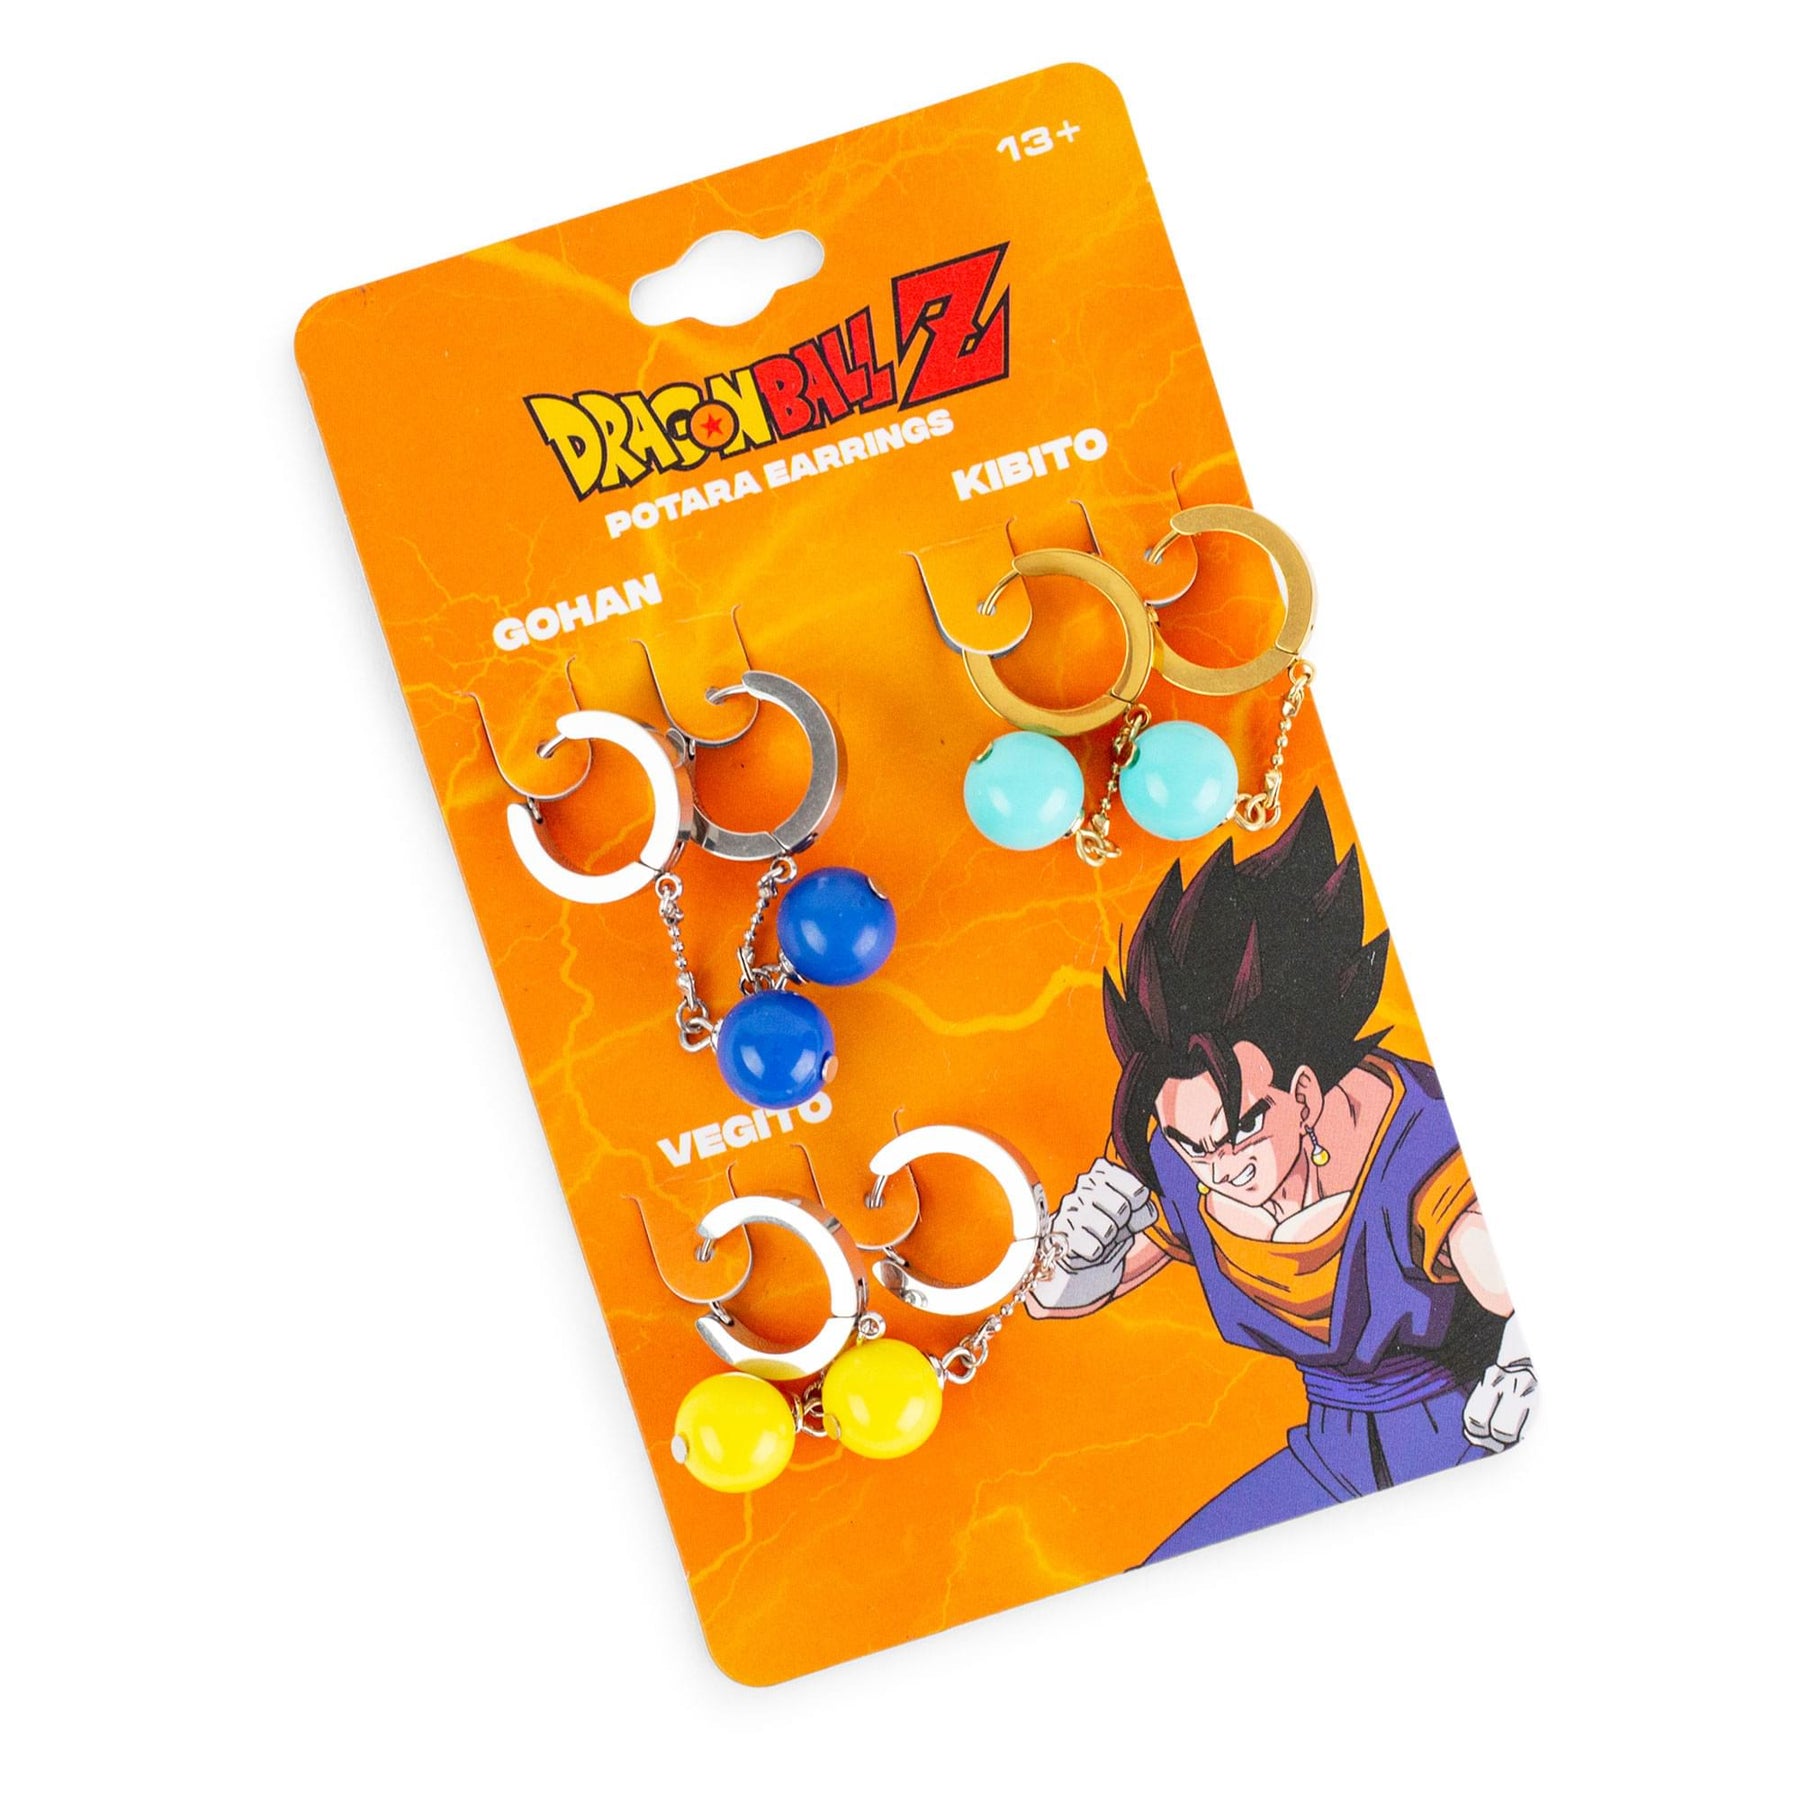 Dragon Ball Z Potara Earrings pre-order limited JAPAN